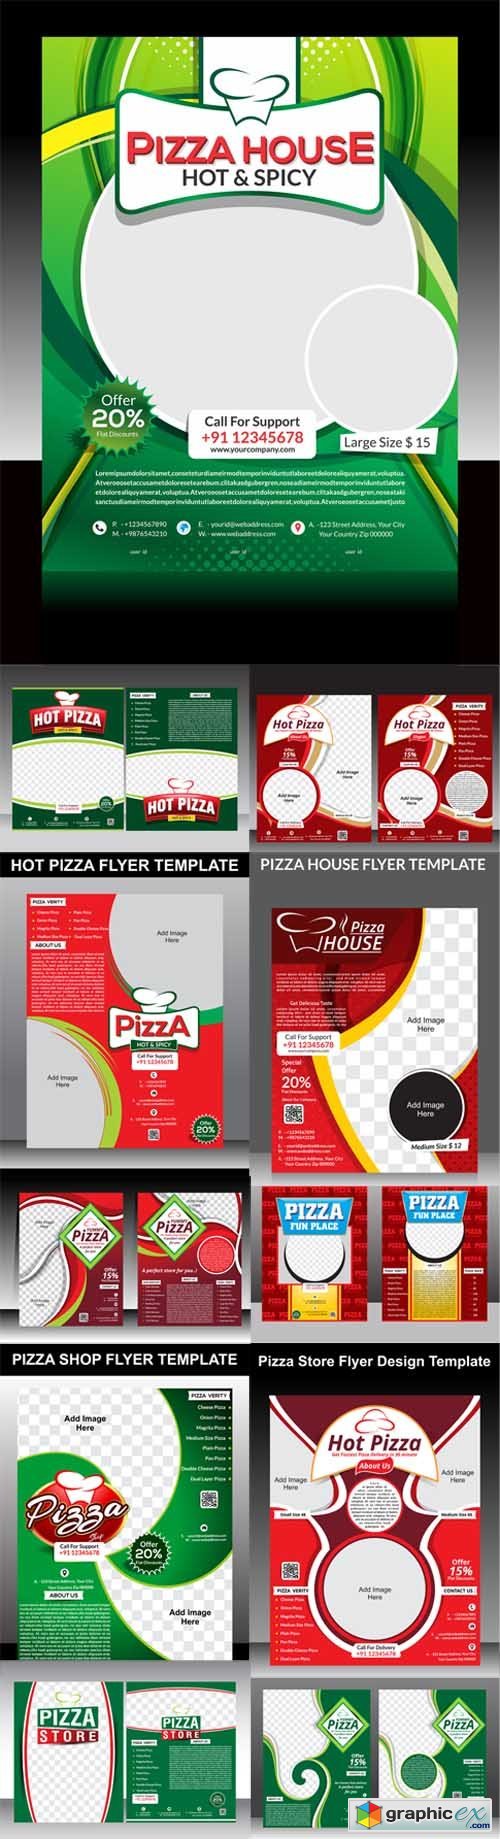 Pizza Store Flyer Design Templates